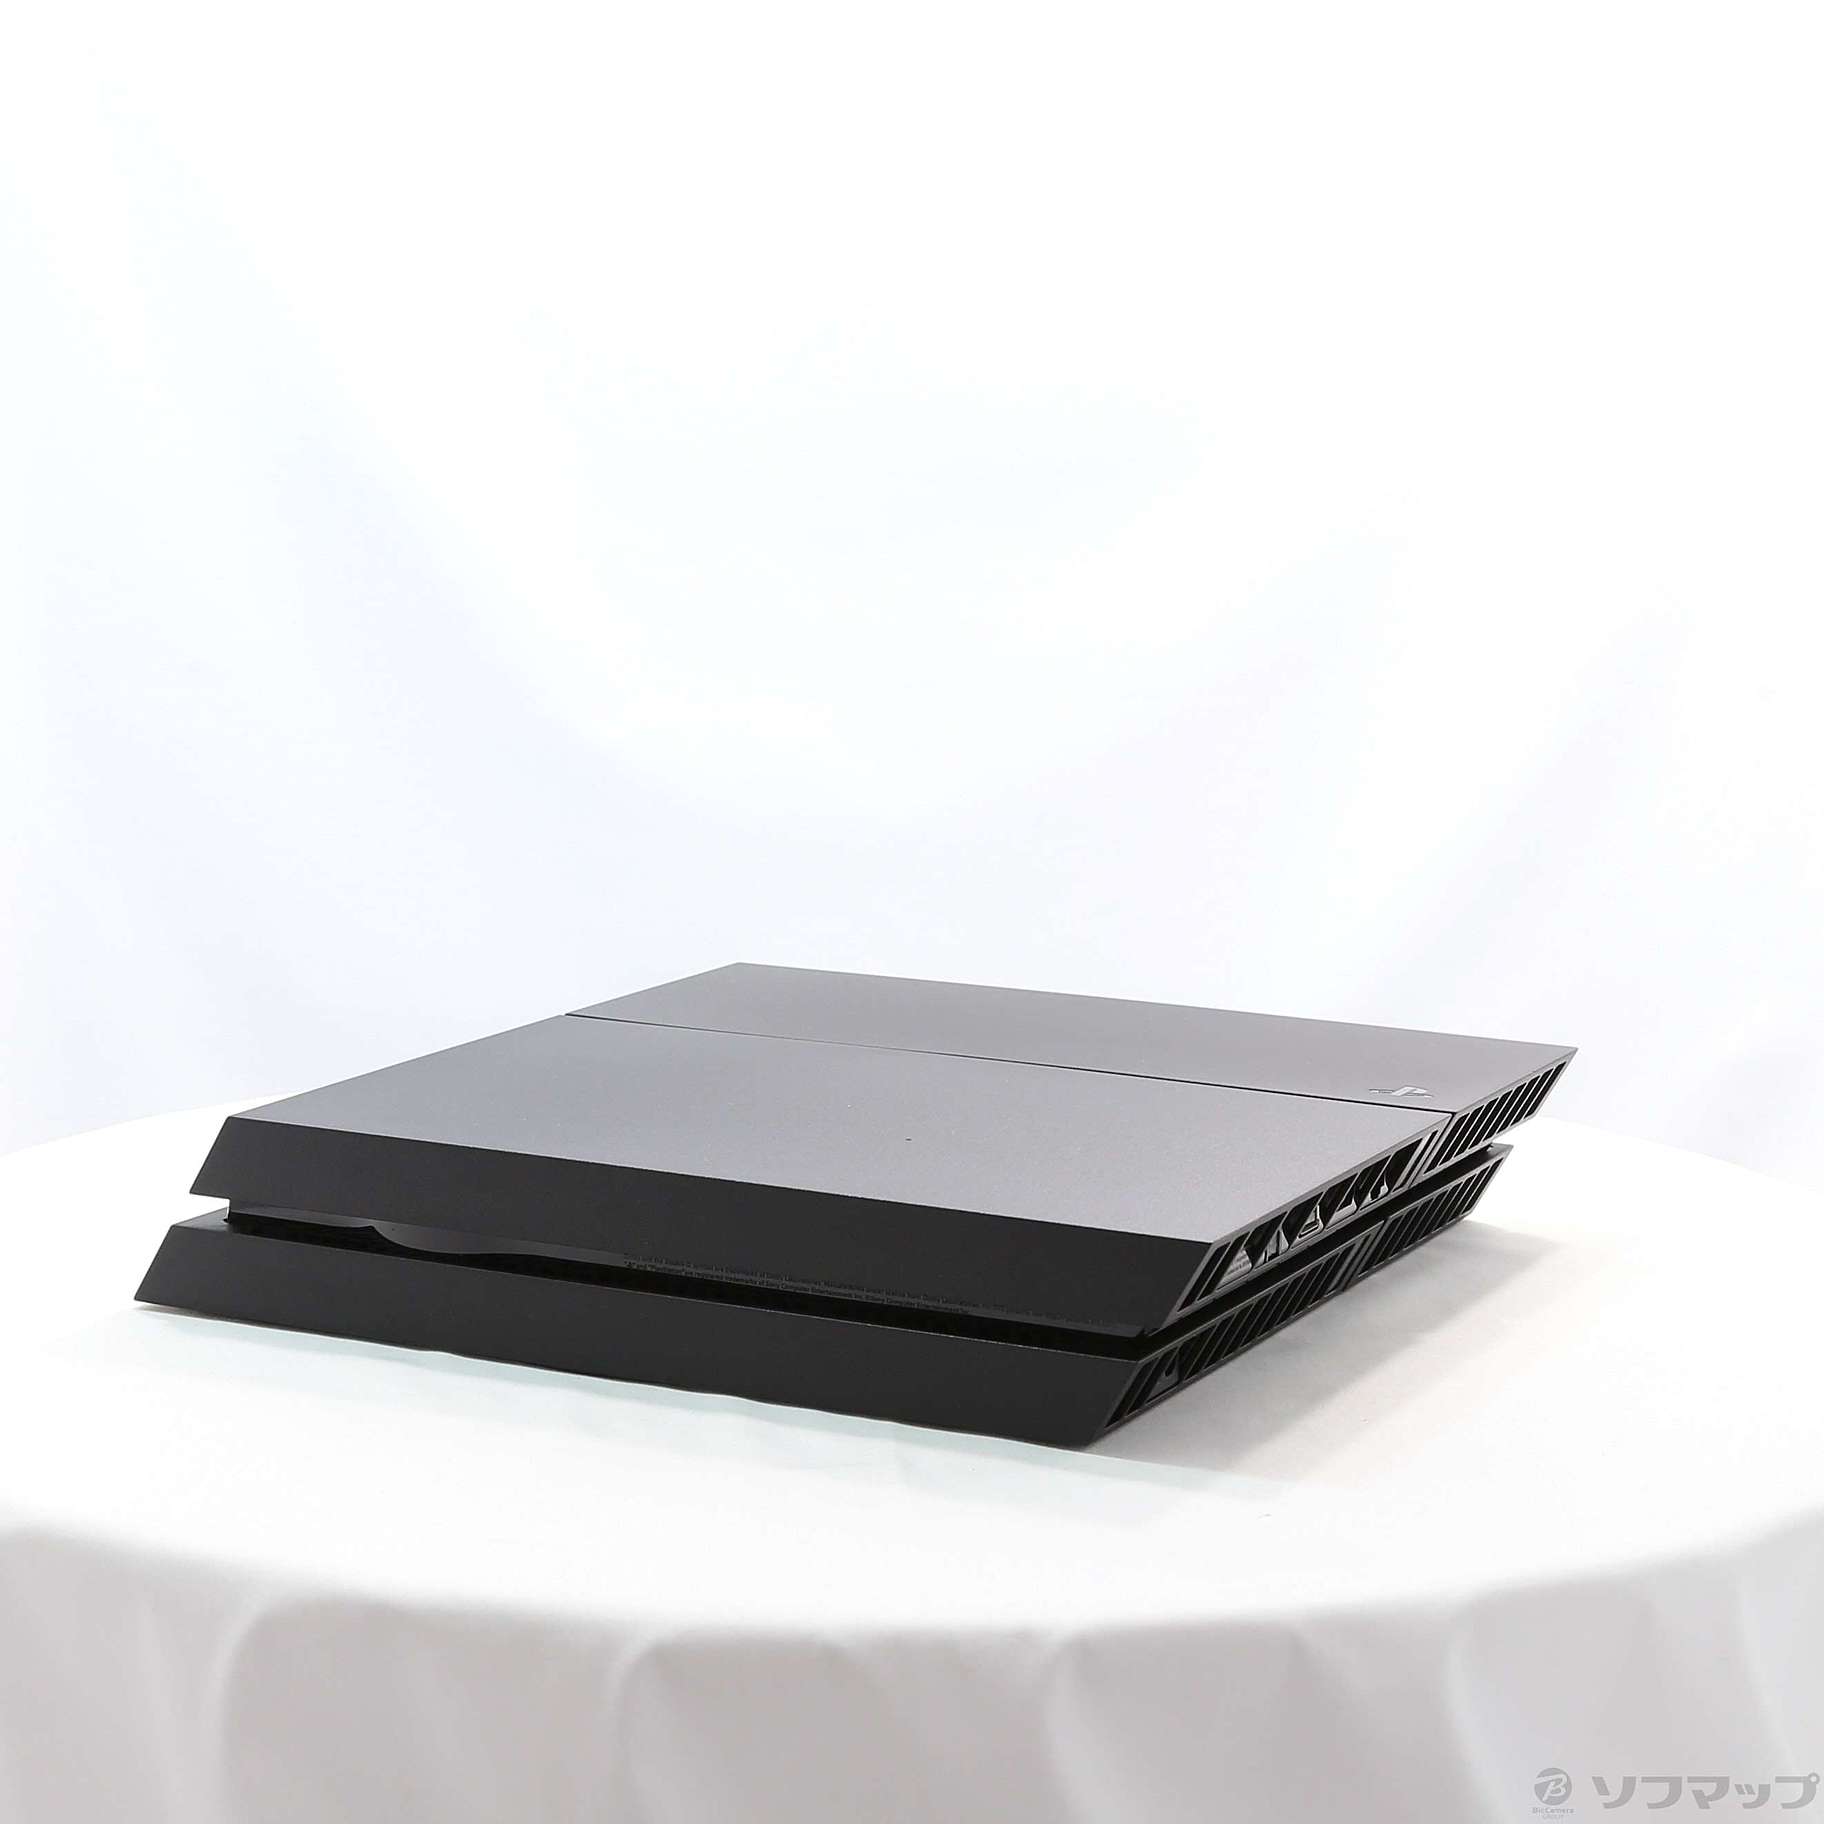 中古品PlayStation 4喷气黑色1TB CUH-1200BB|no邮购是秋叶原☆Sofmap 